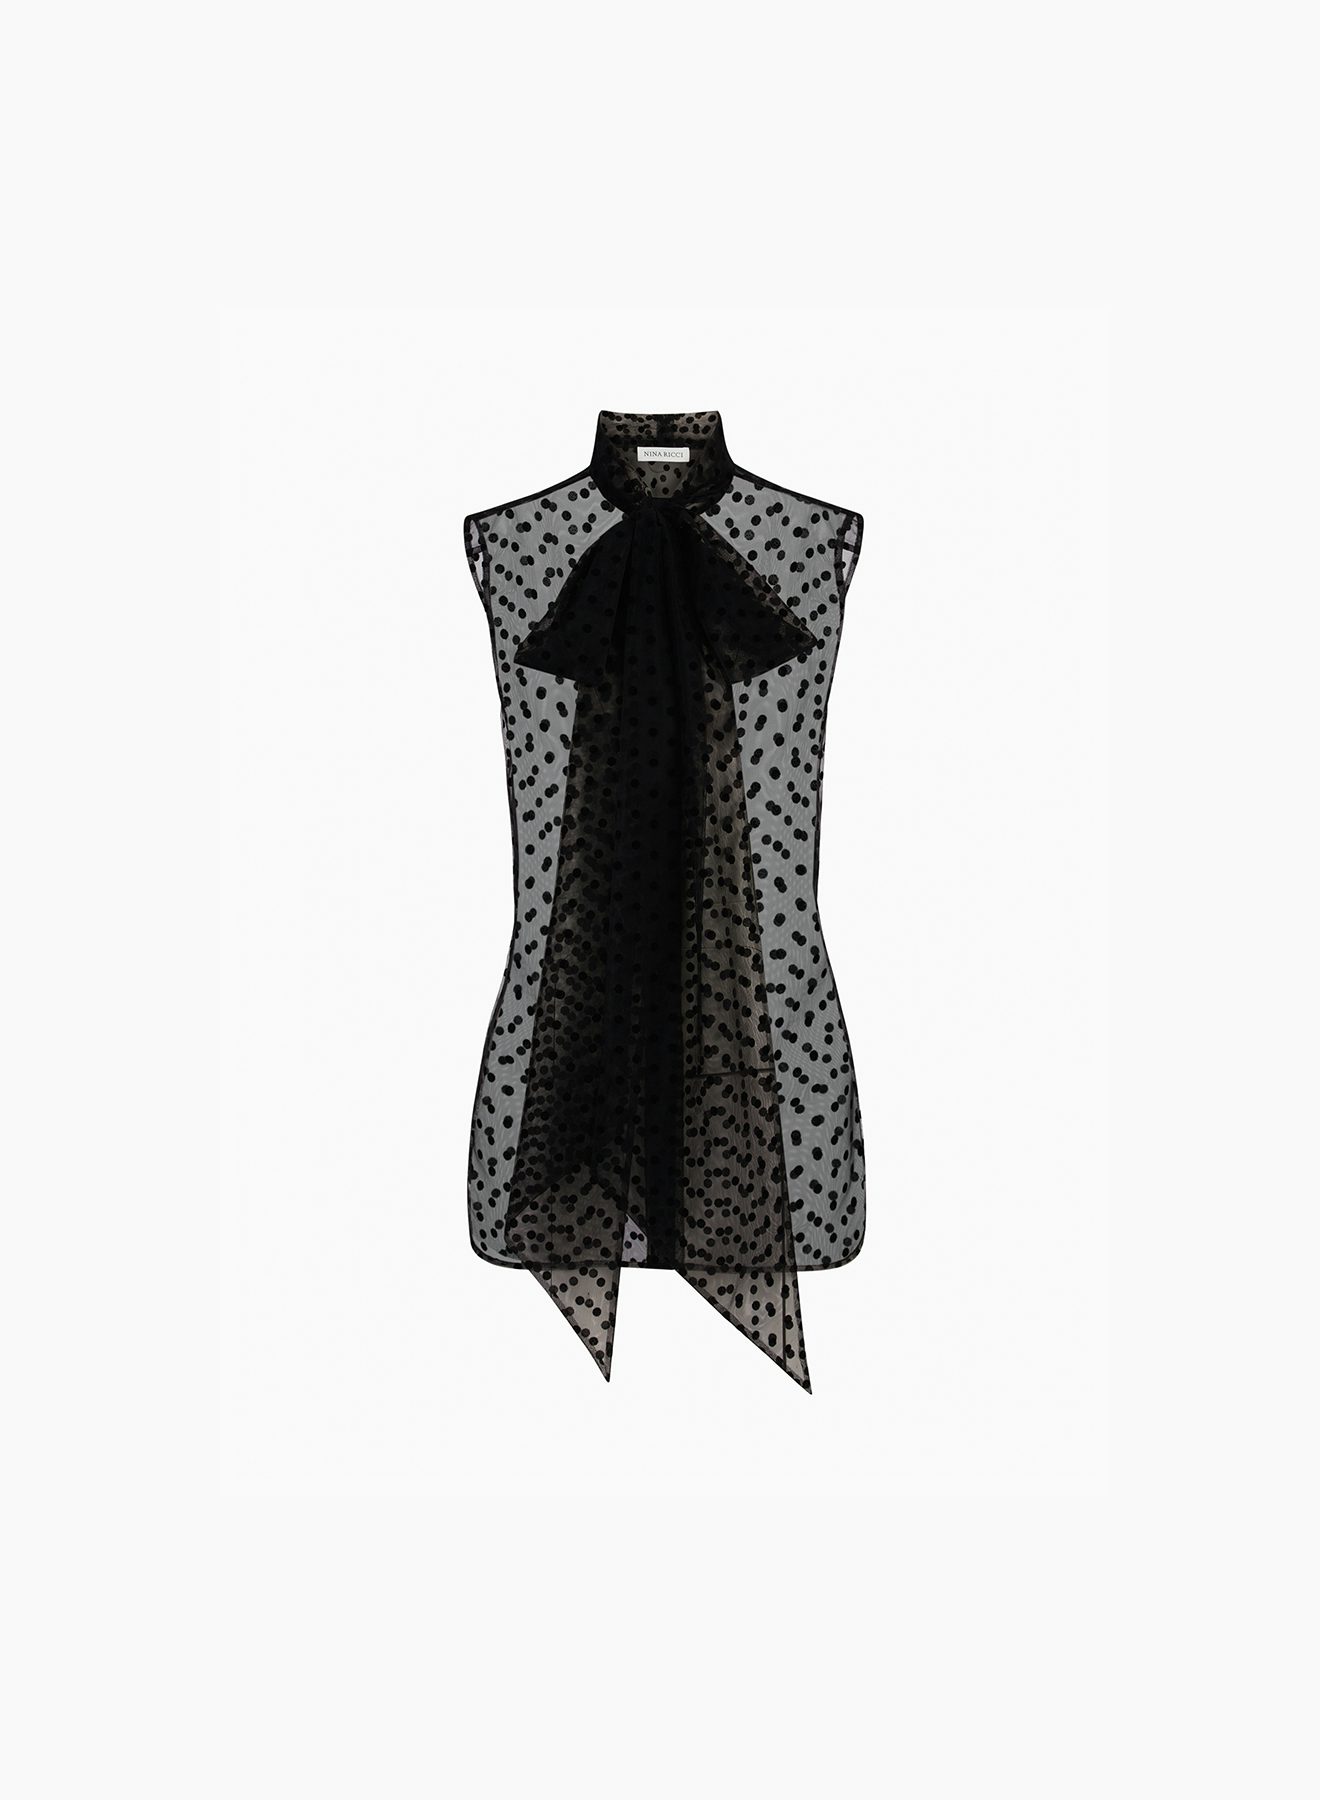 Polka dot sleeveless shirt in black - Nina Ricci